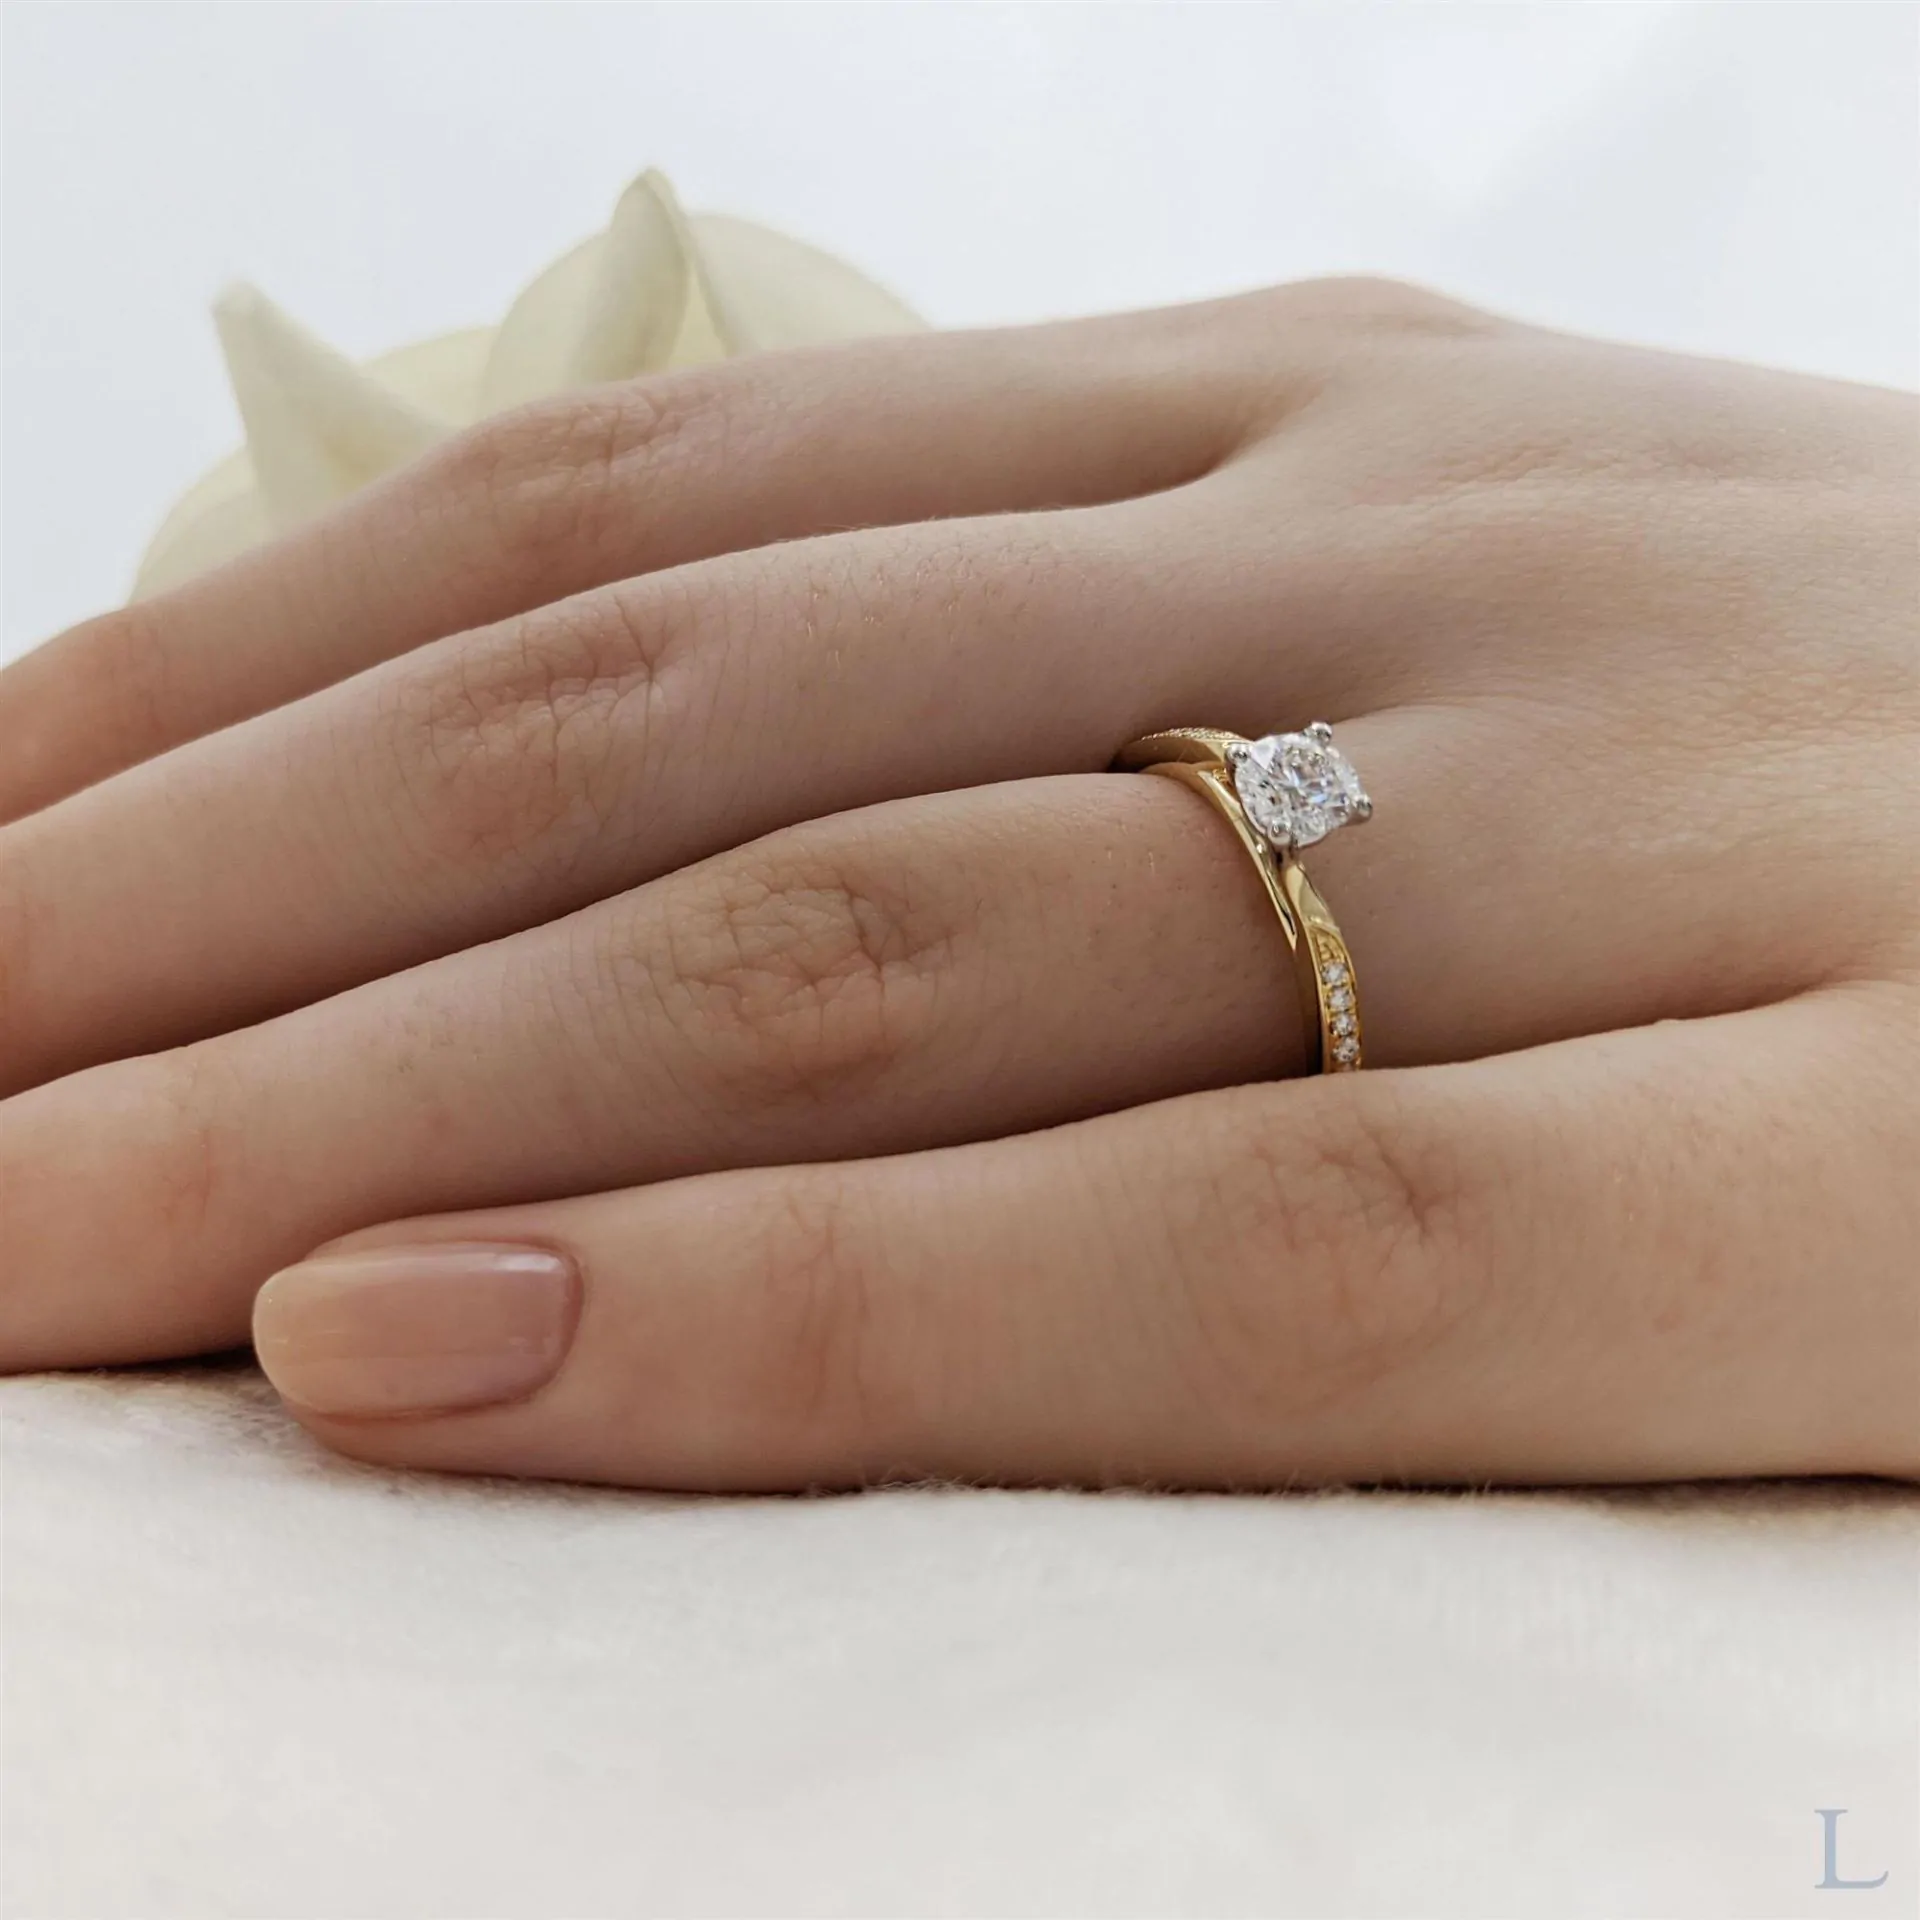 Isabella 18ct Yellow Gold & Platinum 0.34ct G SI1 Brilliant Cut Diamond Solitaire Ring